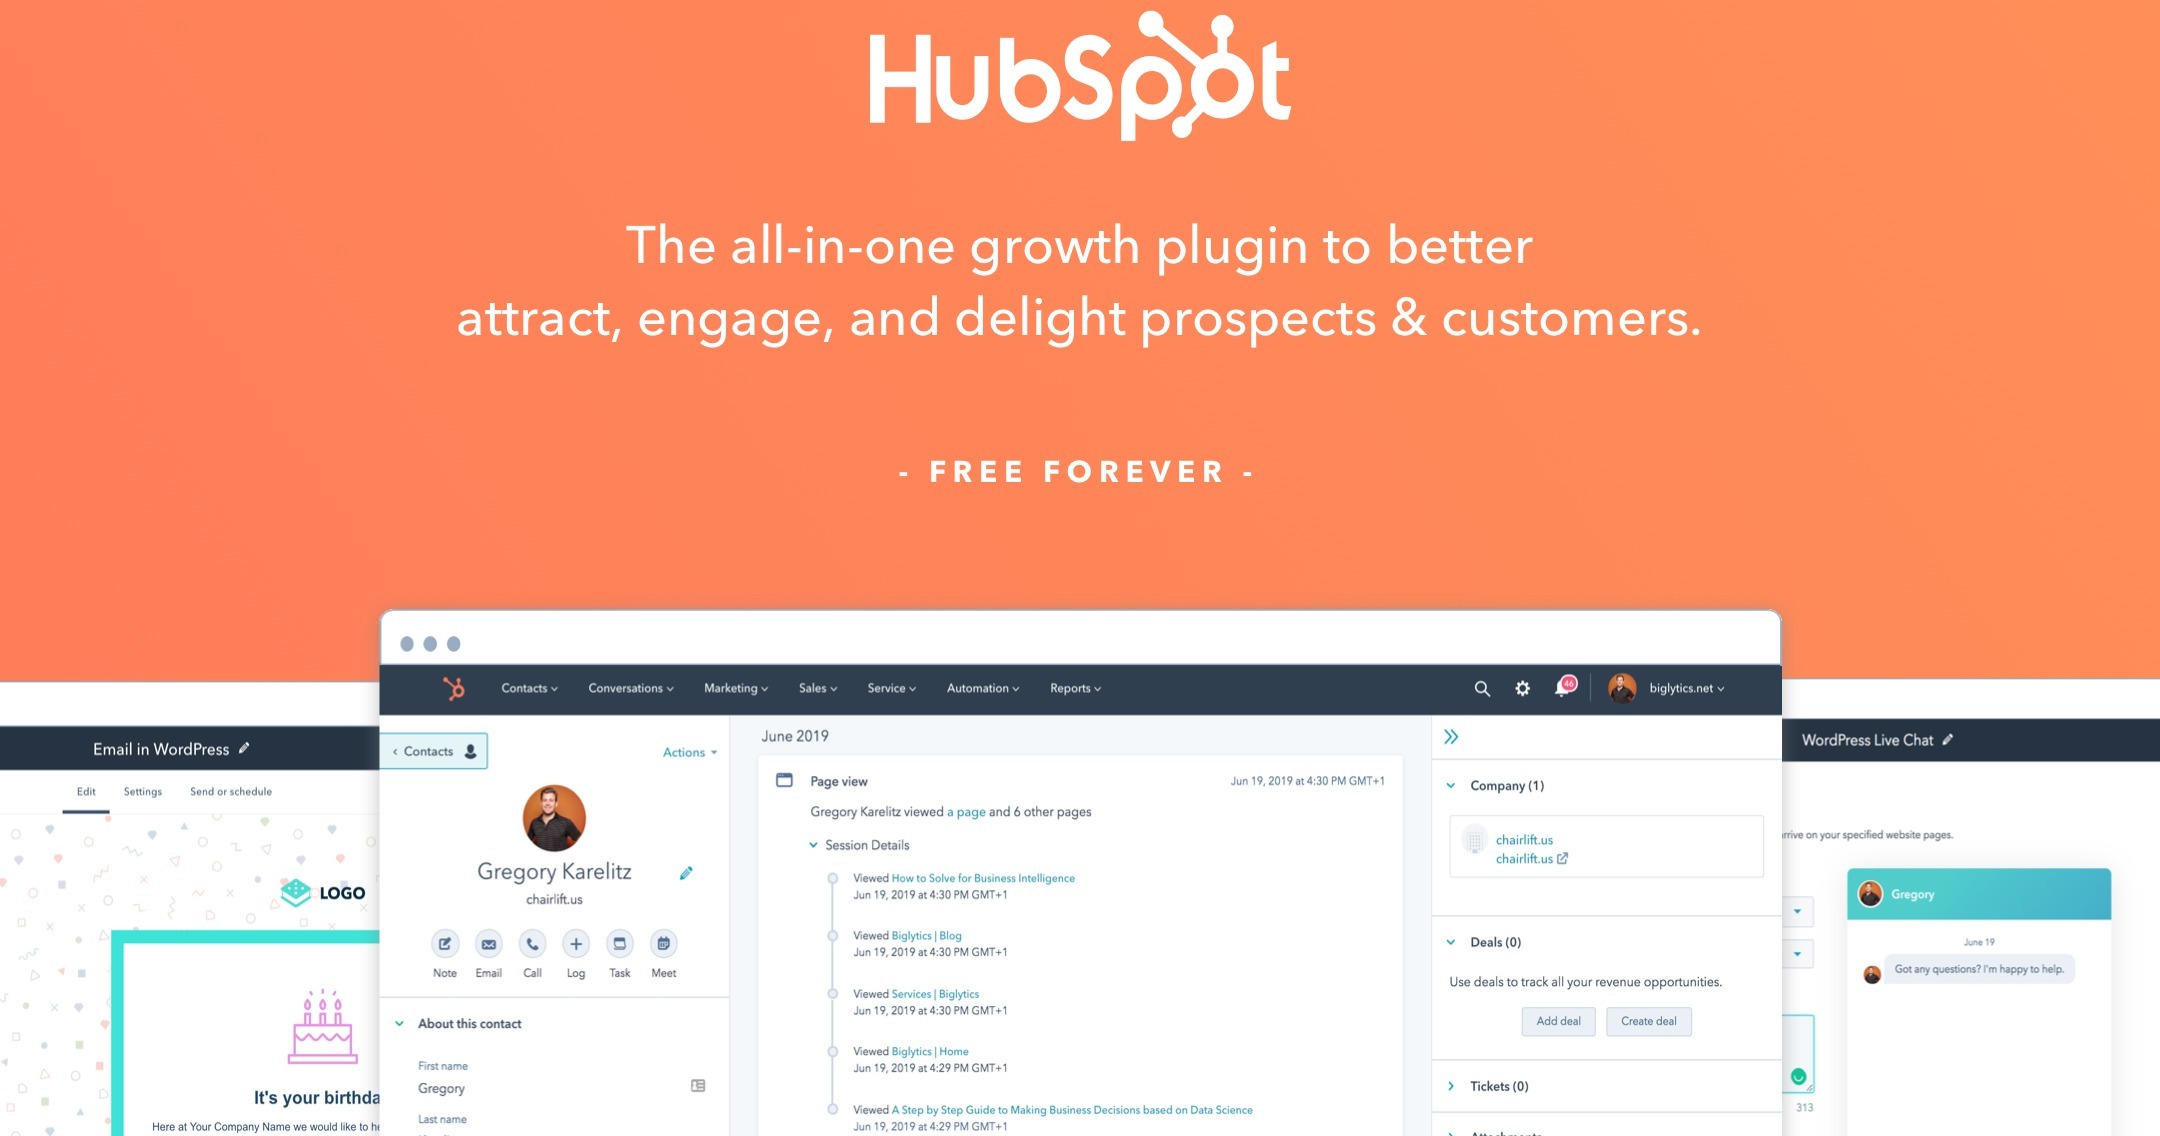 WordPress and HubSpot leads